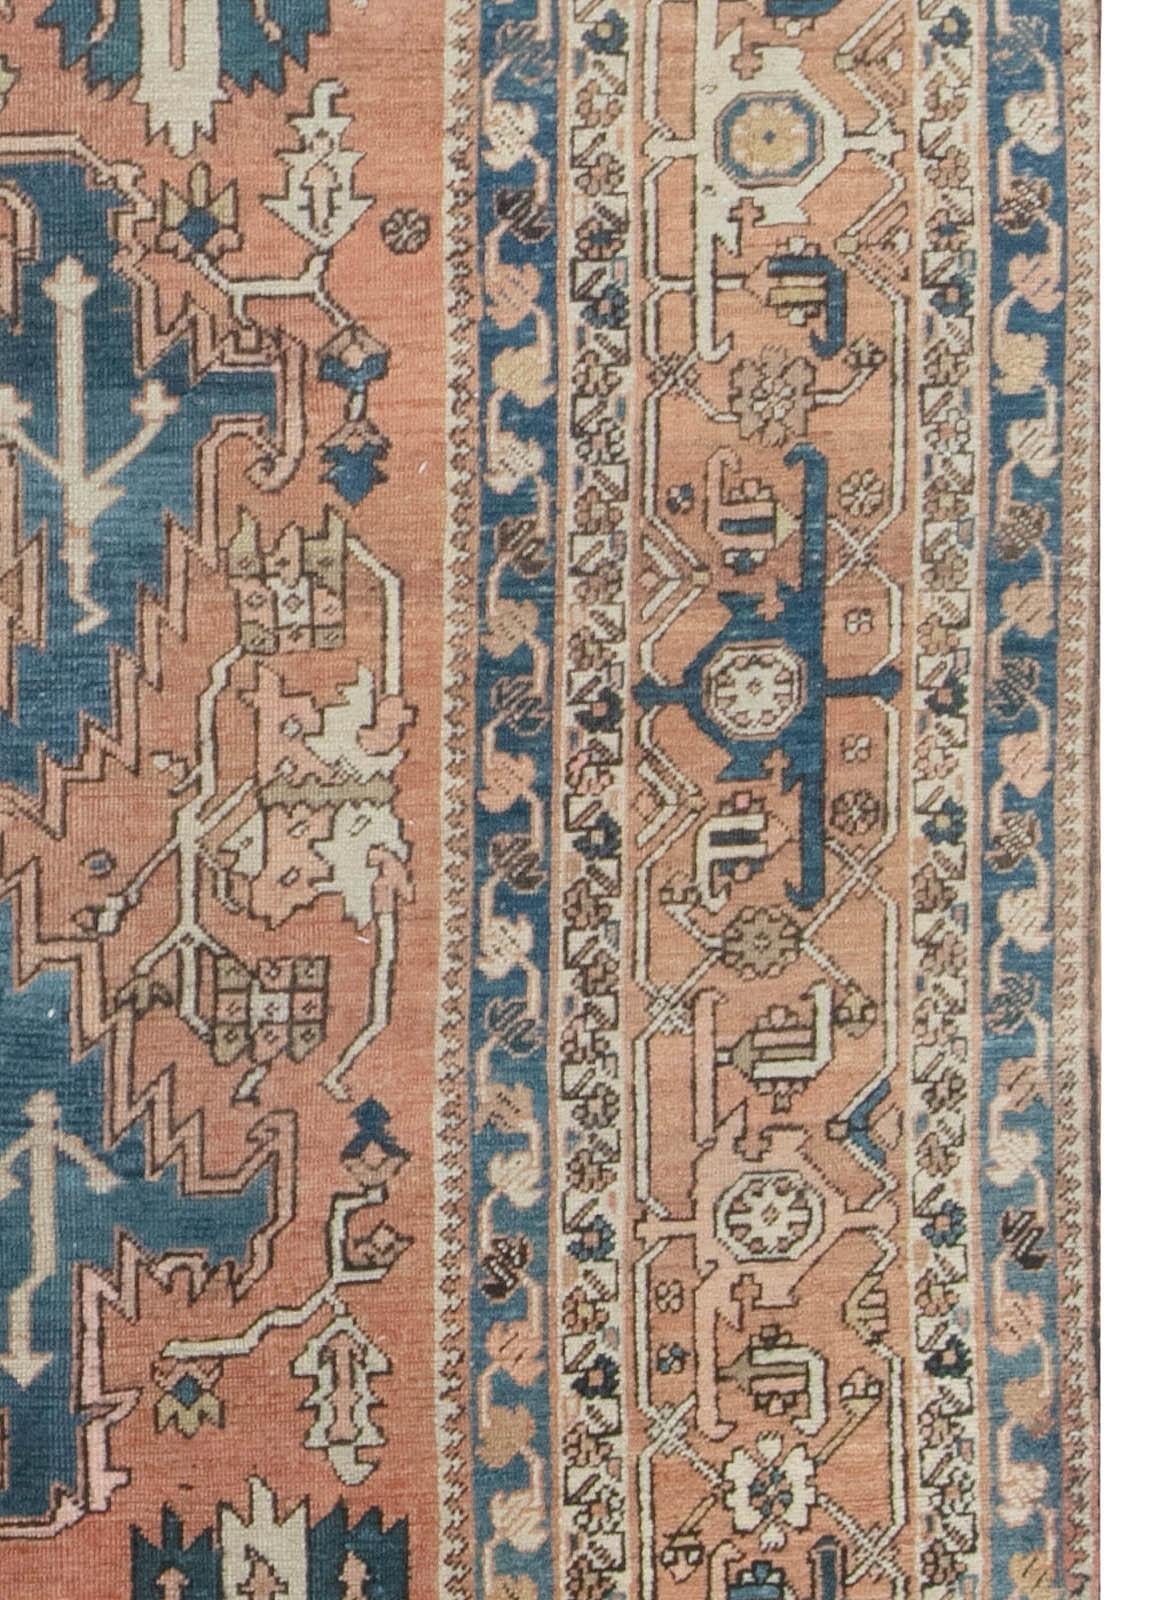 Antique Persian Heriz Brown & Navy Blue Handwoven Wool Rug (20. Jahrhundert)